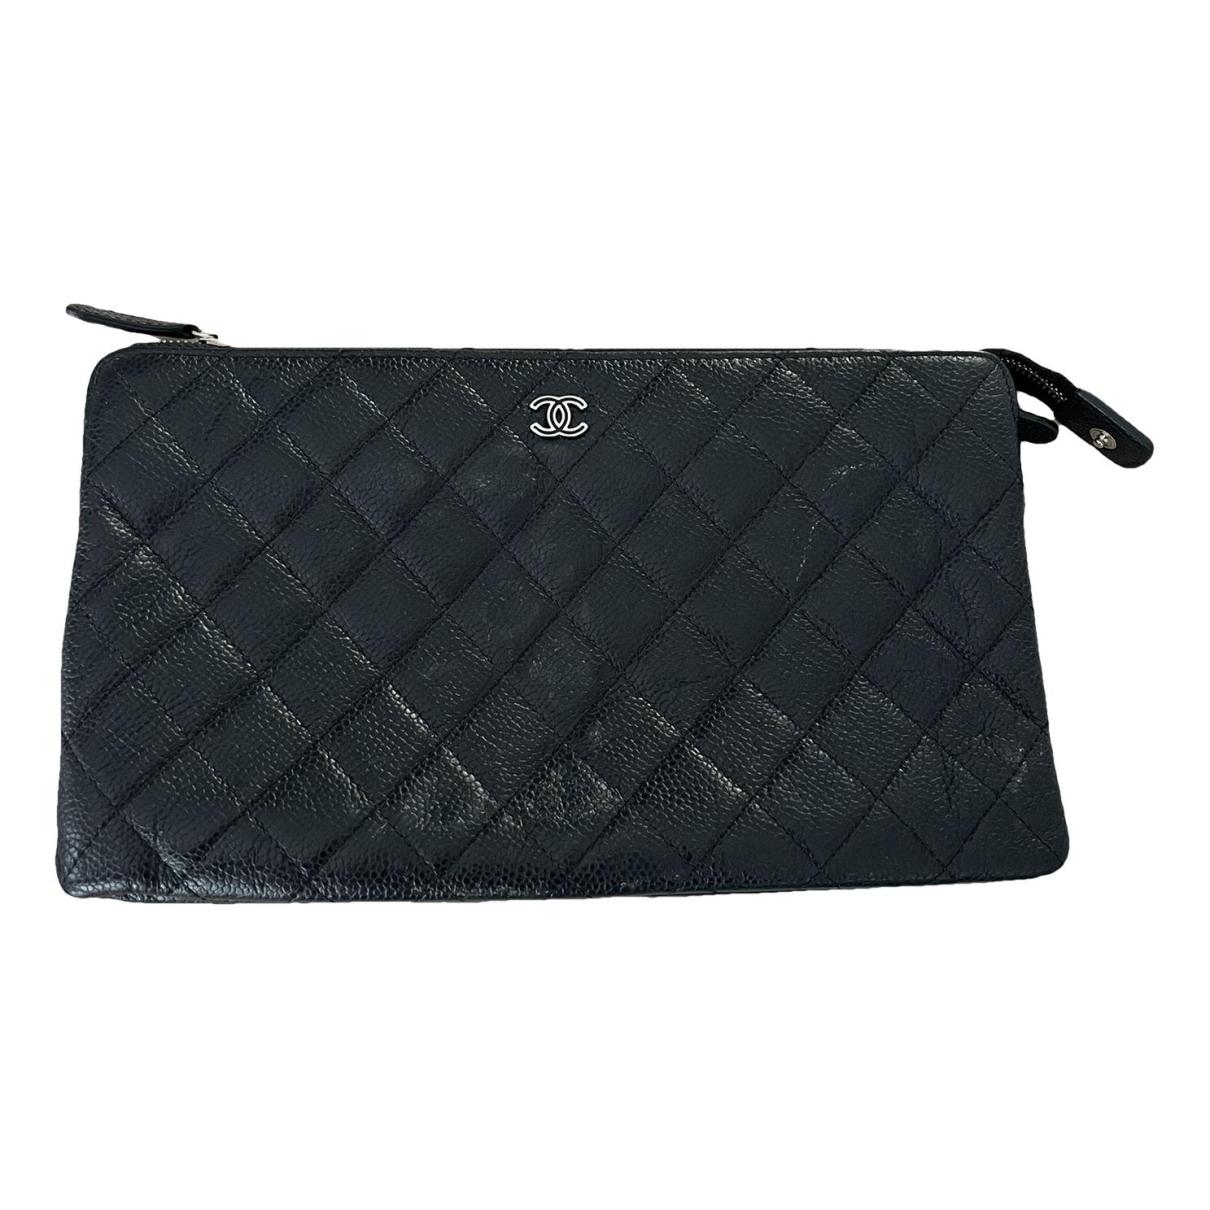 Chanel Classic Timeless in Black Matelassé leather shoulder bag Chanel